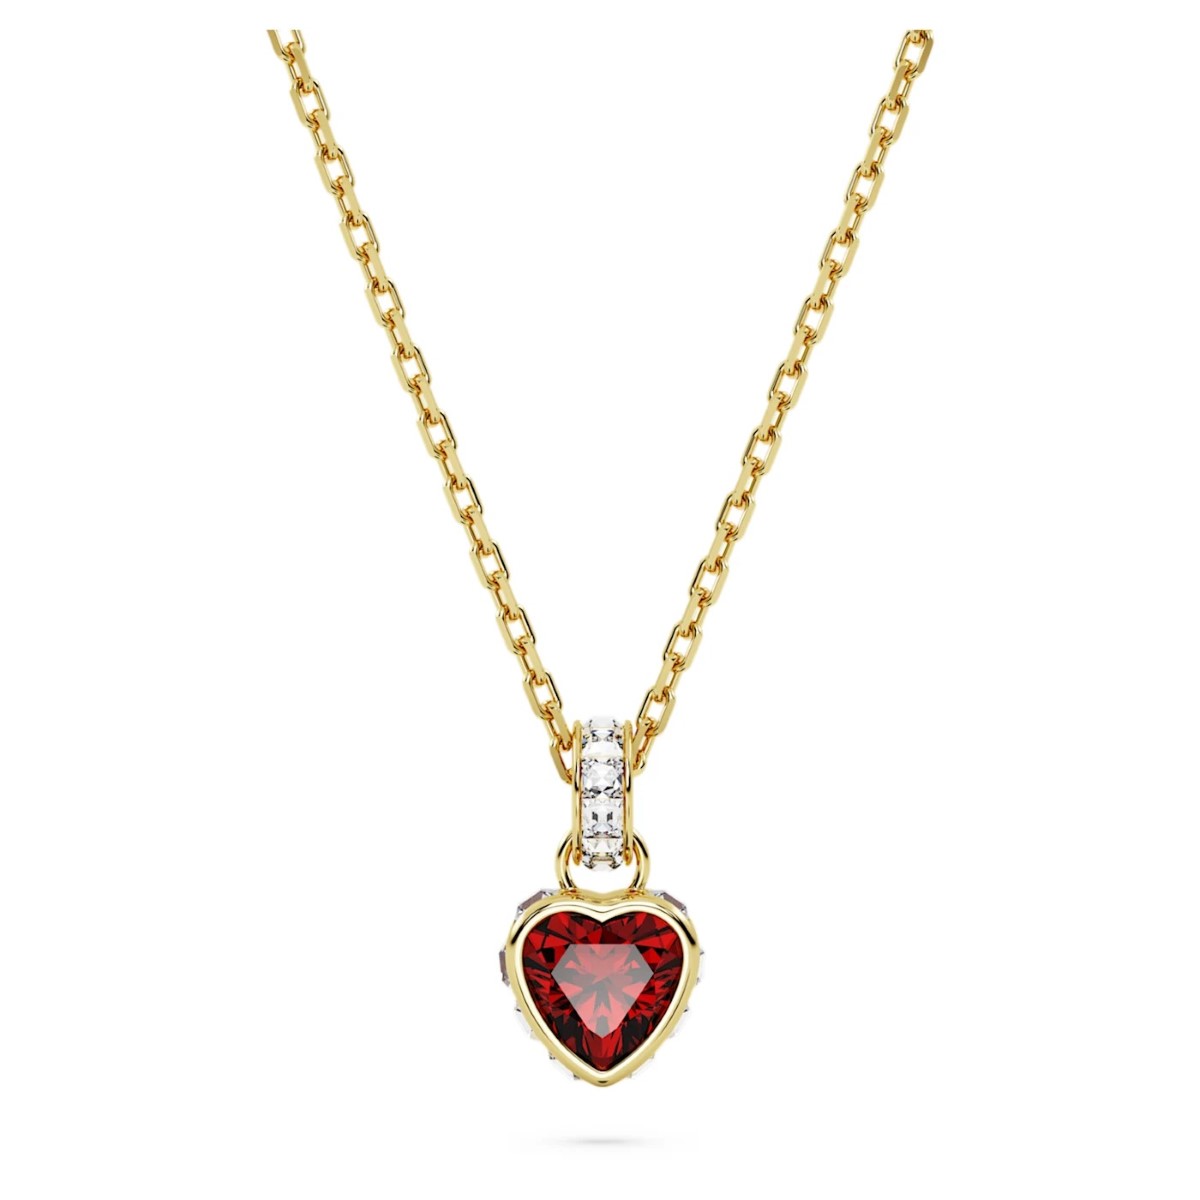 Photos - Pendant / Choker Necklace Swarovski Stilla Heart Pendant Necklace - Red with Gold Tone Plating 